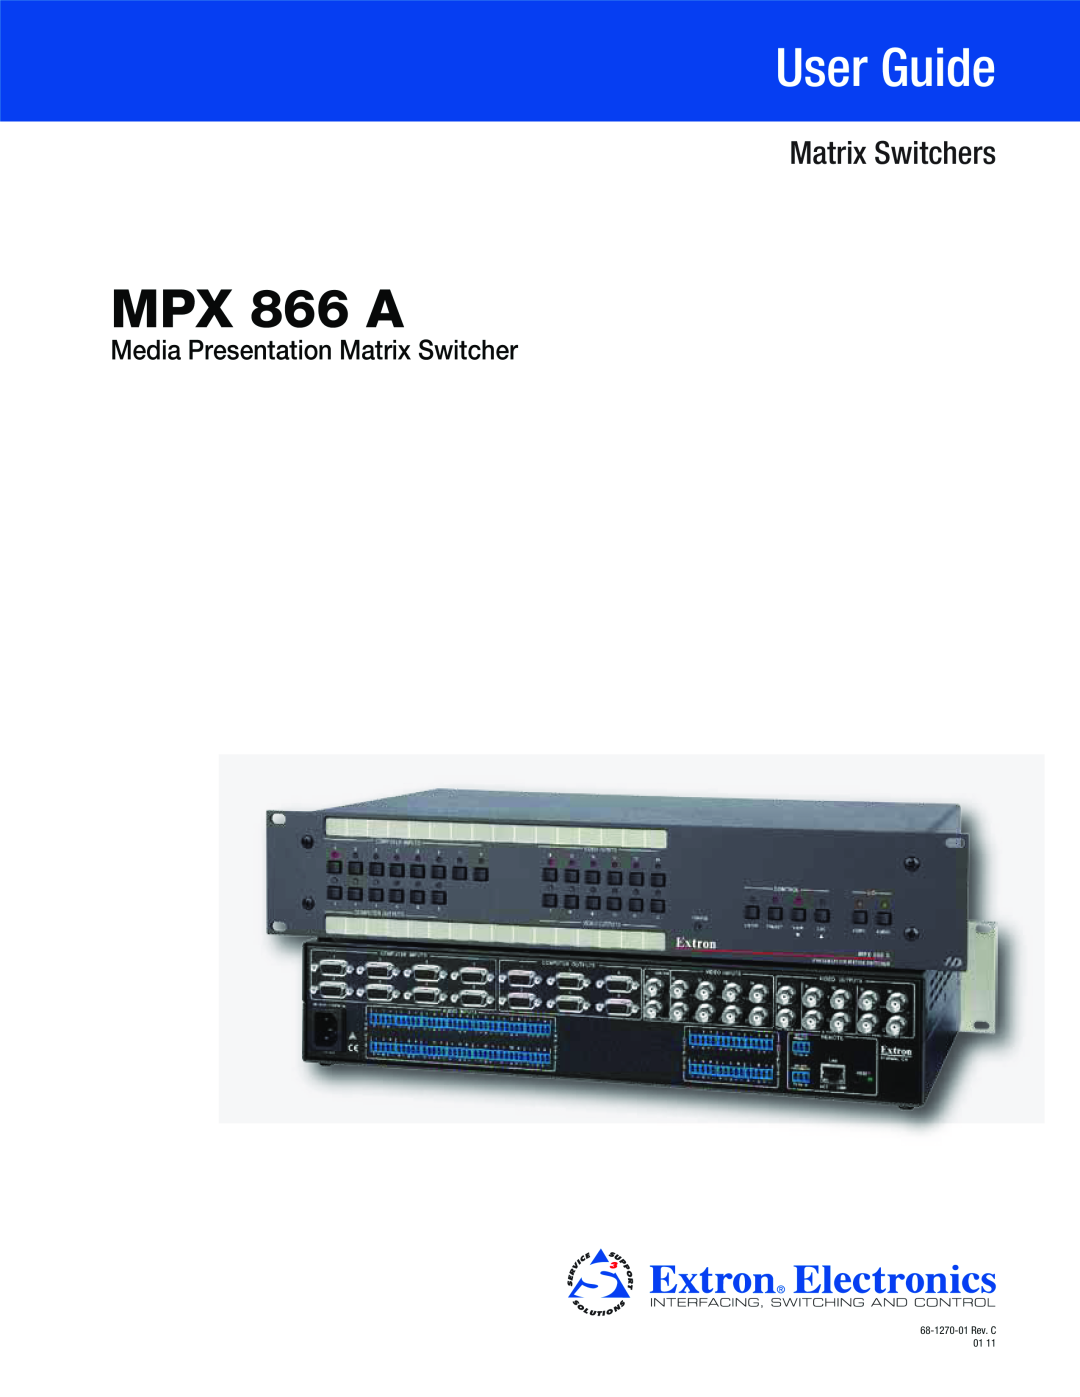 Extron electronic MPX 866 A manual User Guide, Matrix Switchers, Media Presentation Matrix Switcher, 68-1270-01 Rev. C 